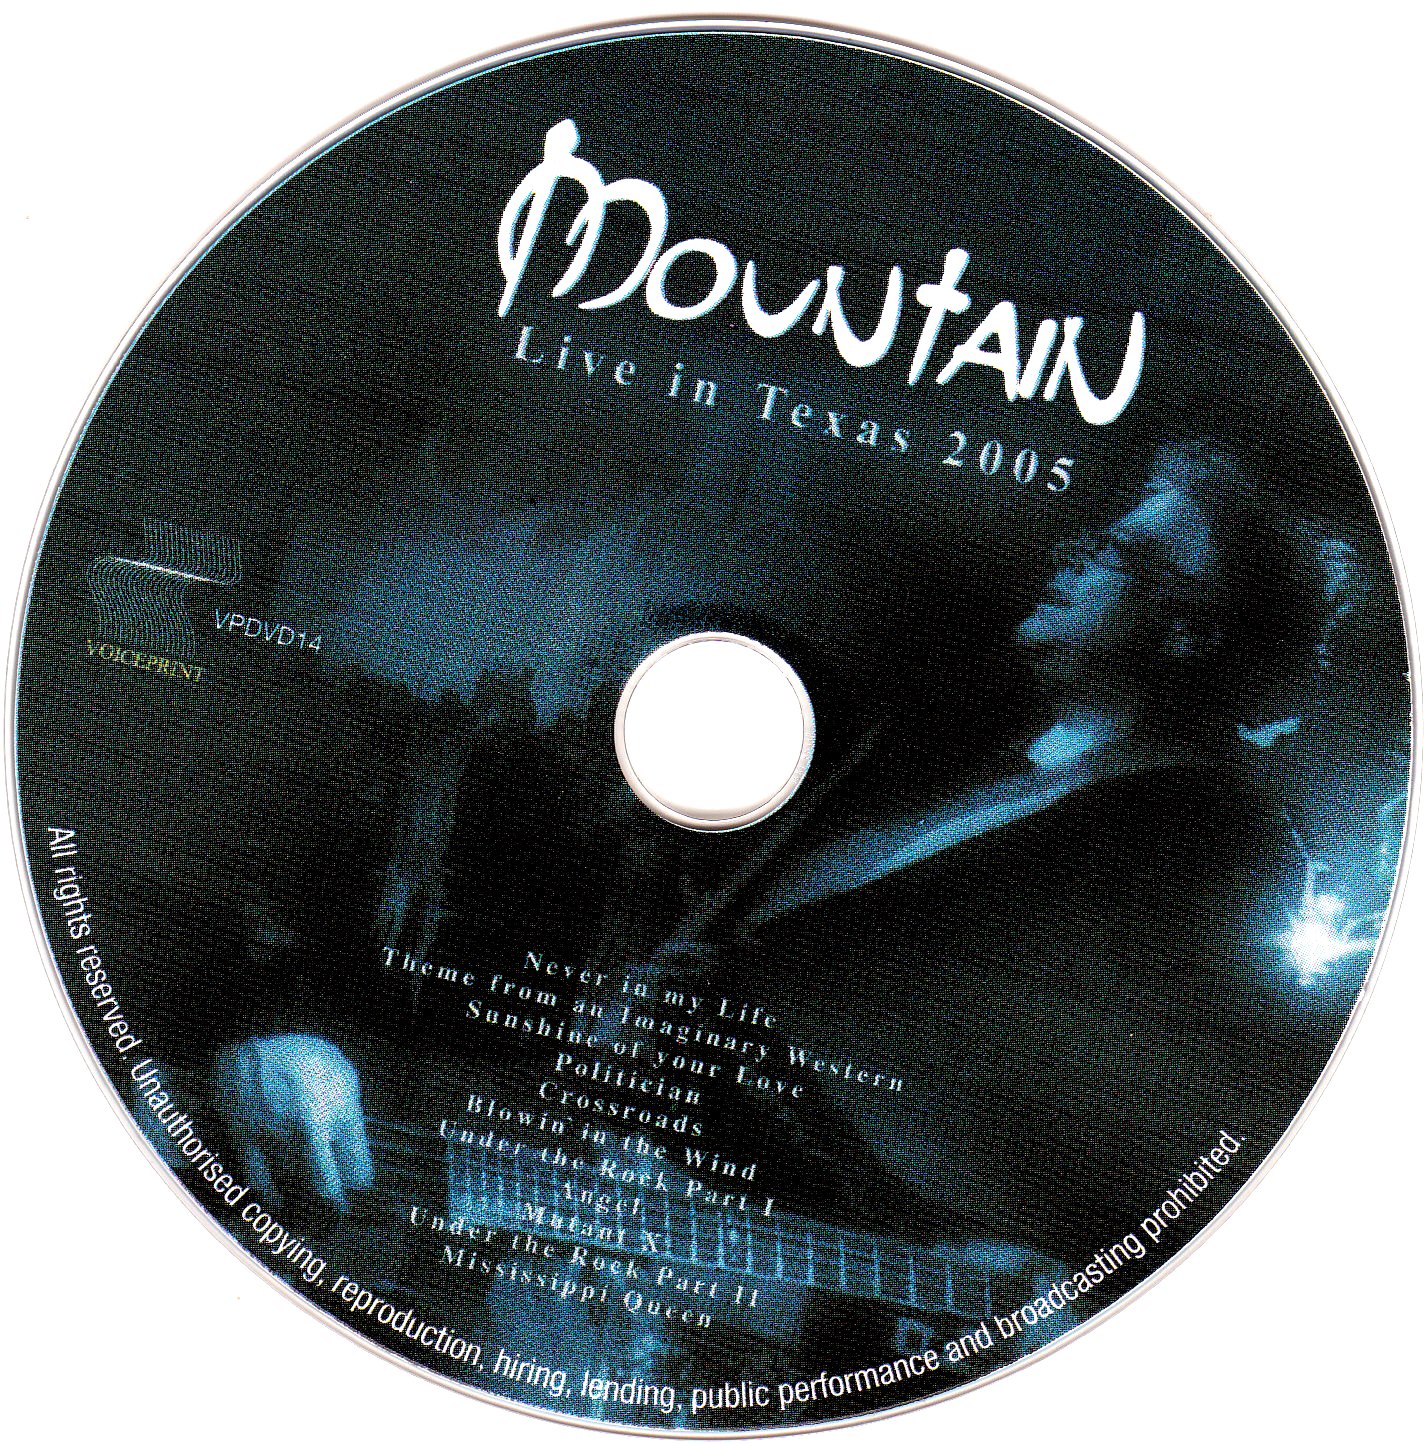 Mountain Live in Texas 2005